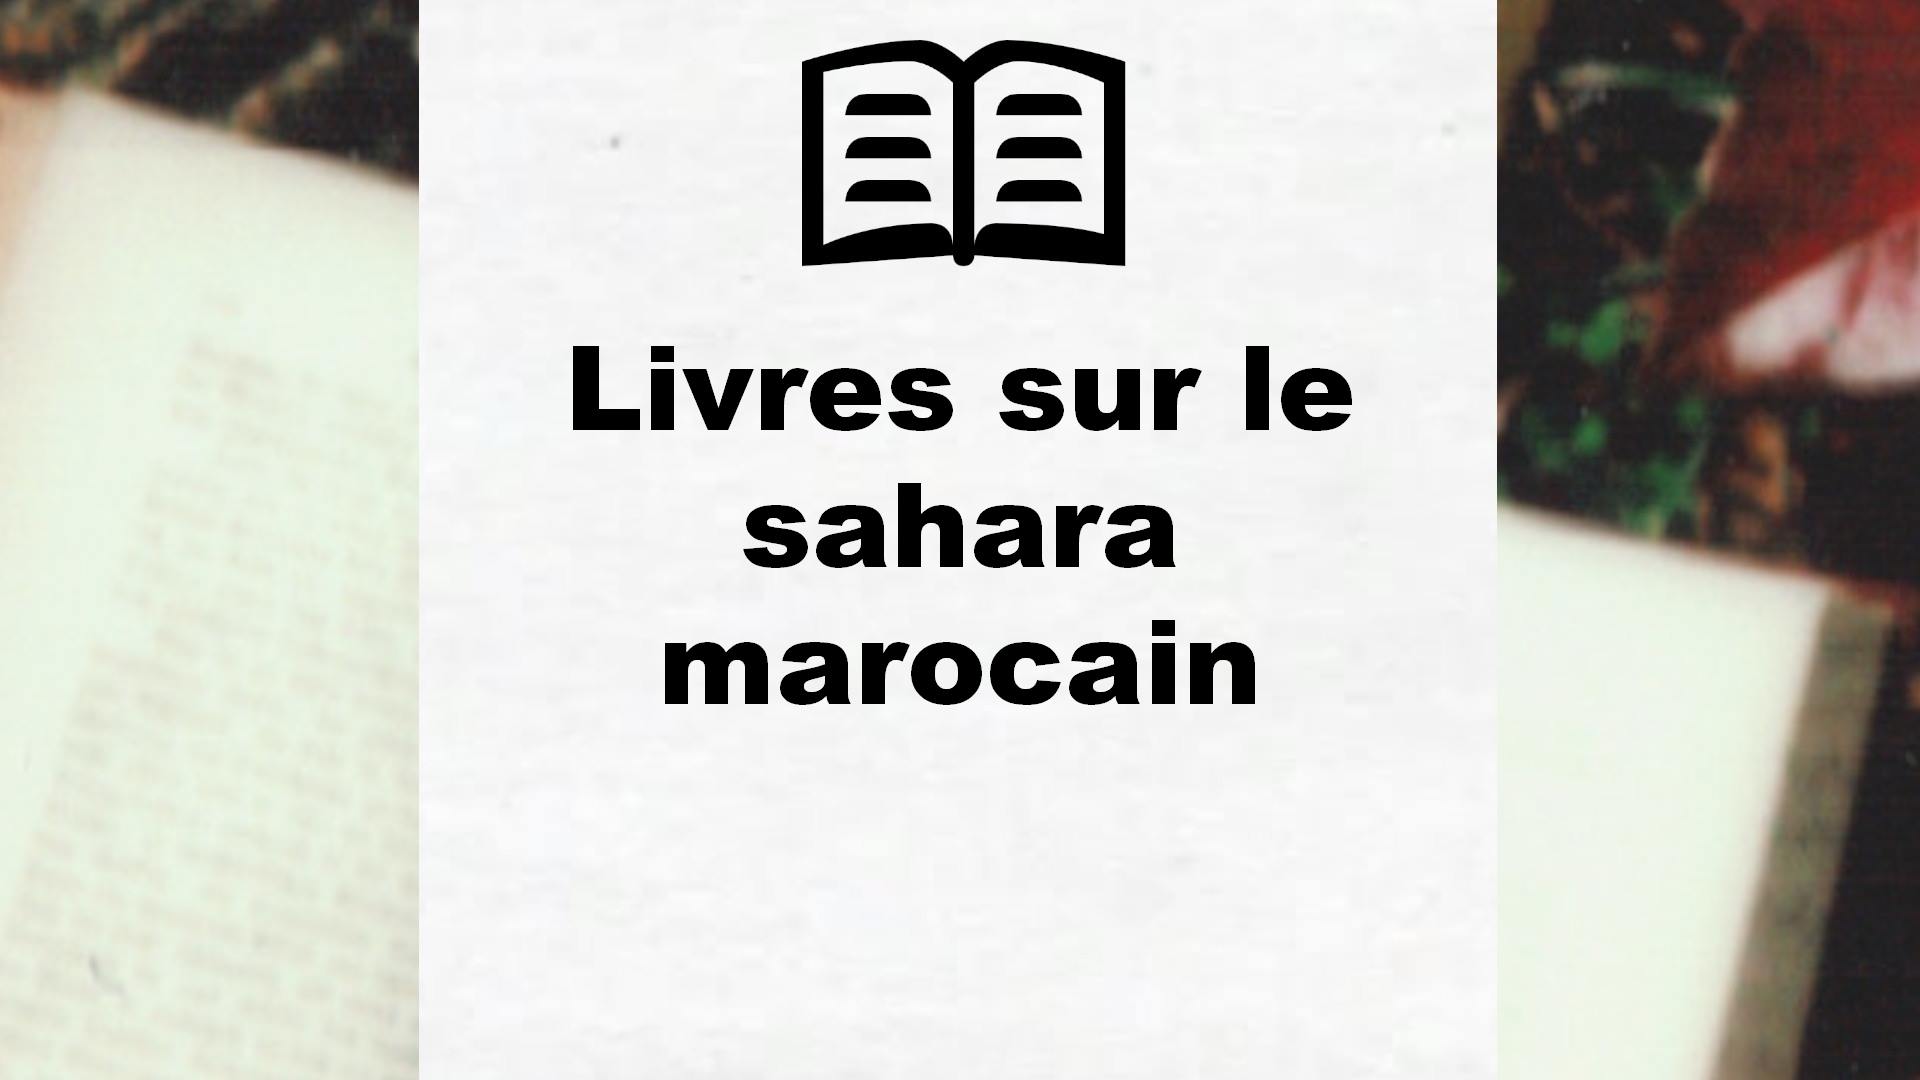 Livres sur le sahara marocain